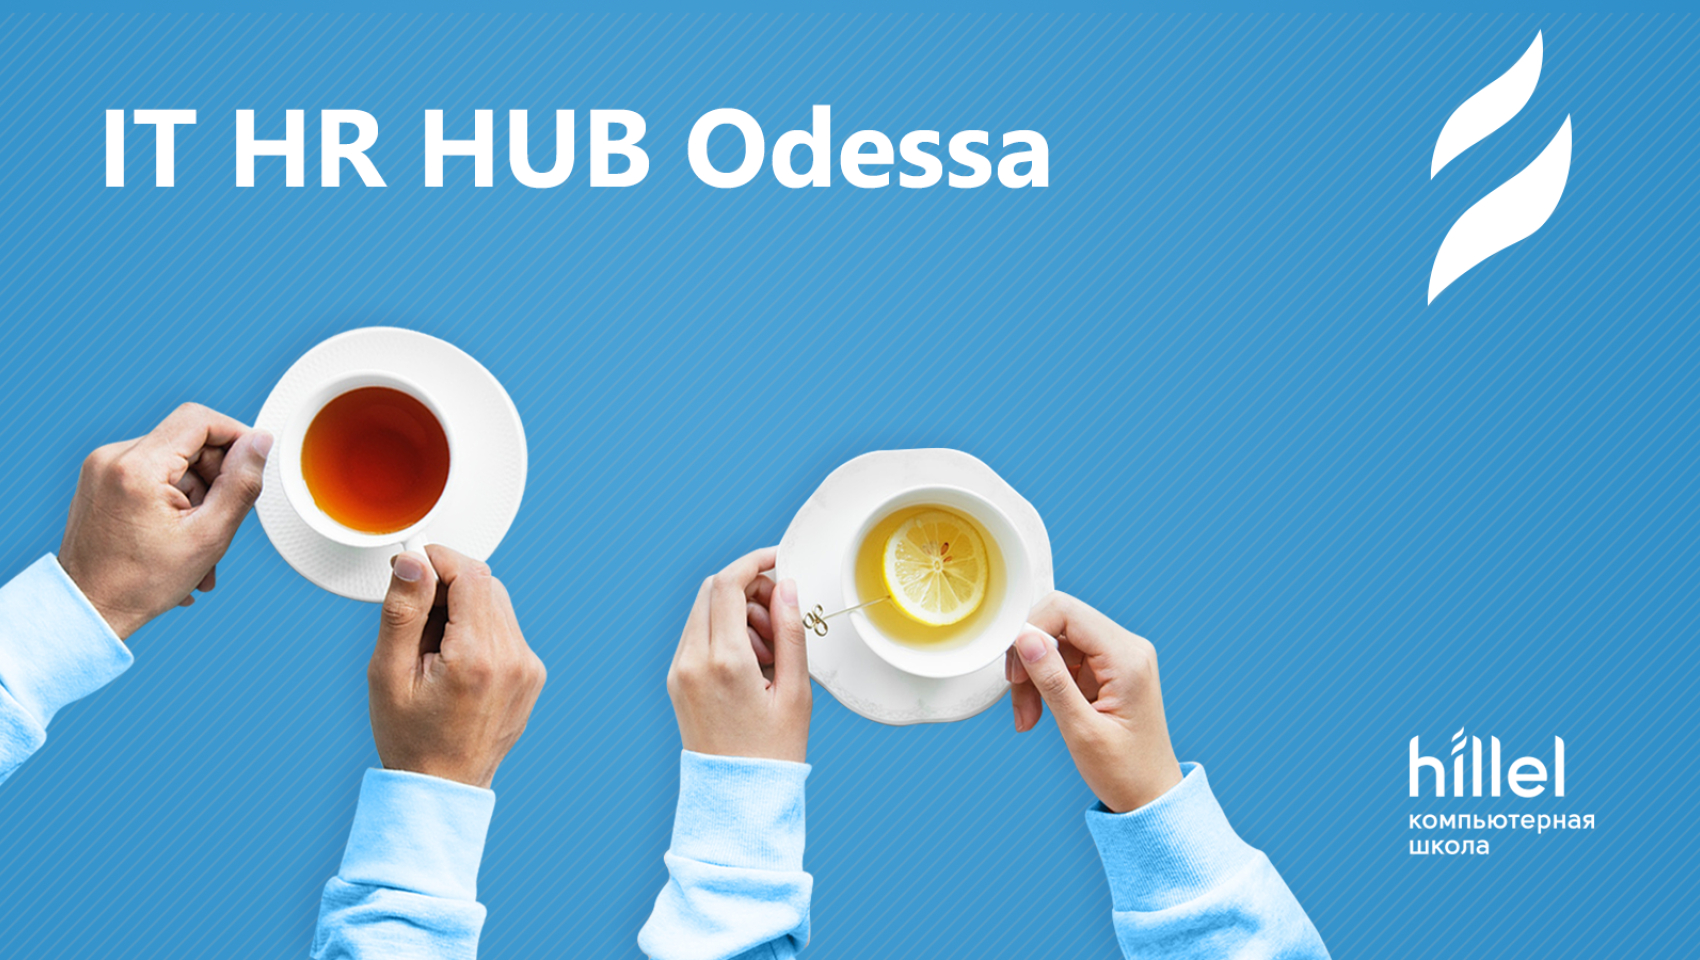 Первый митап IT HR HUB Odessa